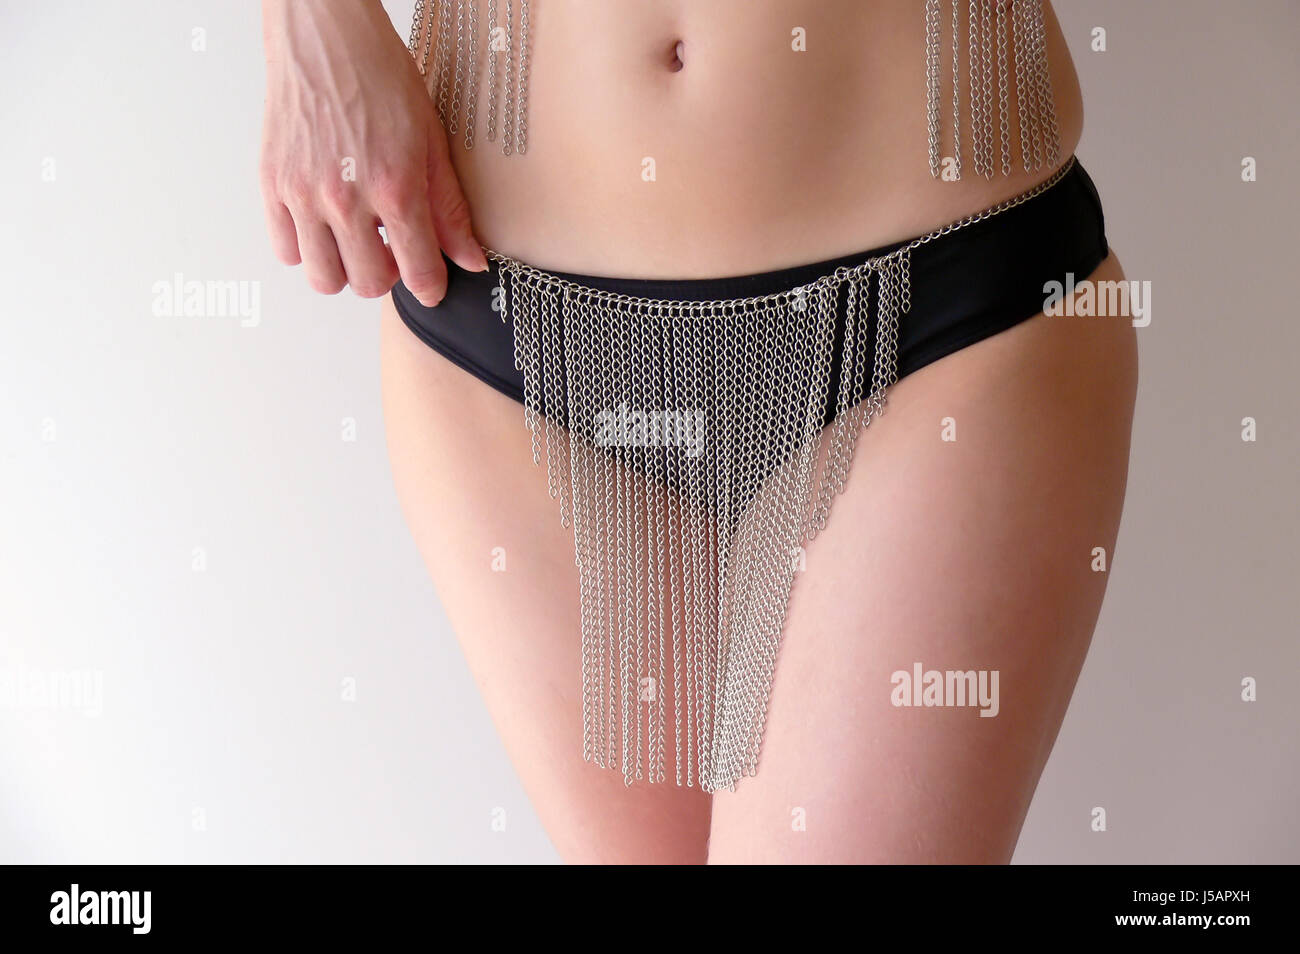 woman hand female skin jewelry jewellery bikini belly tummy bellybutton chains Stock Photo picture